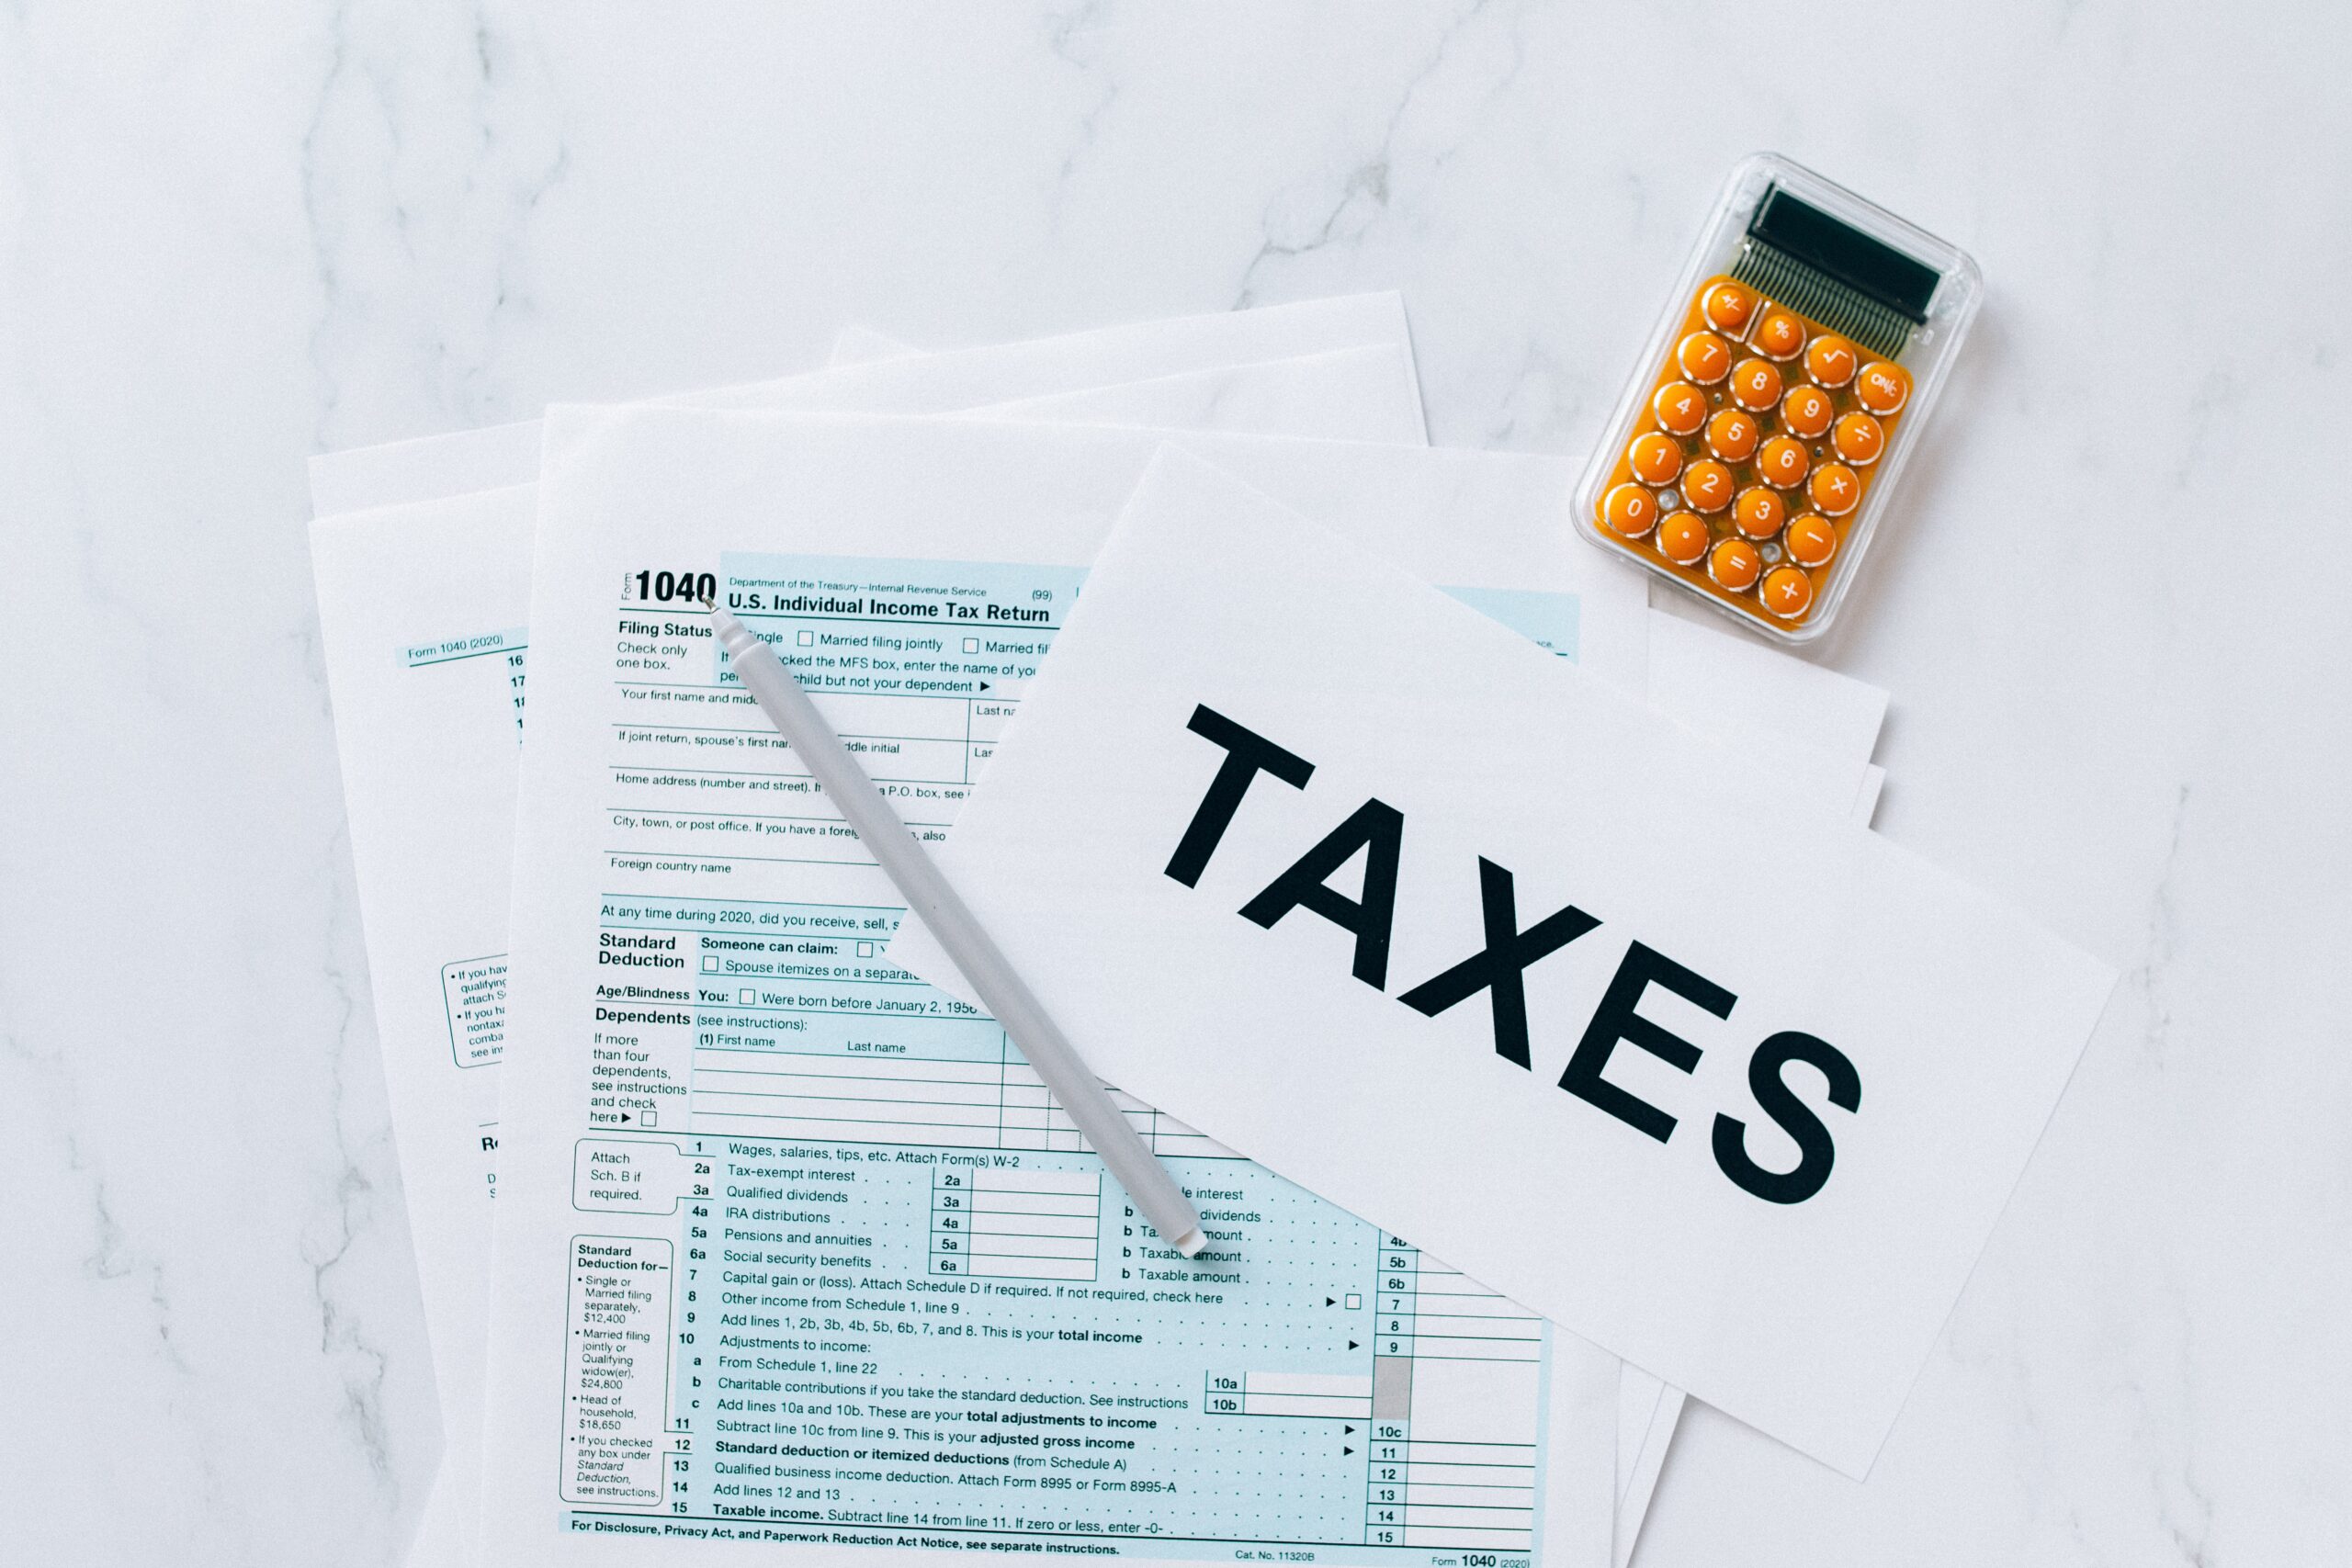 Tax season documents ready for mobile shredding services